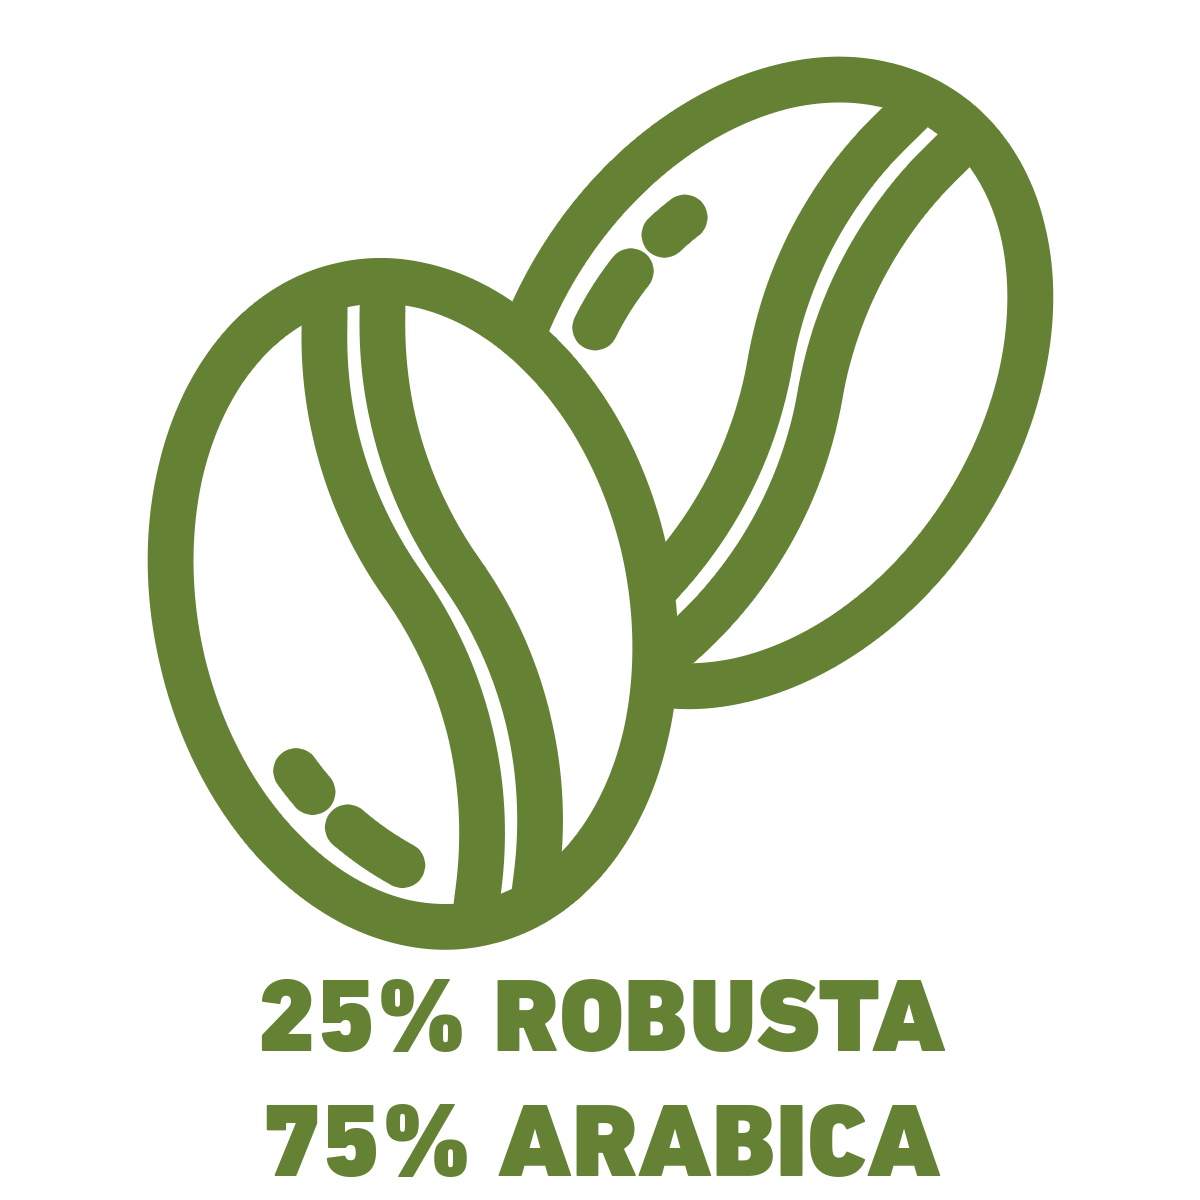 25% Robusta 75% Arabica